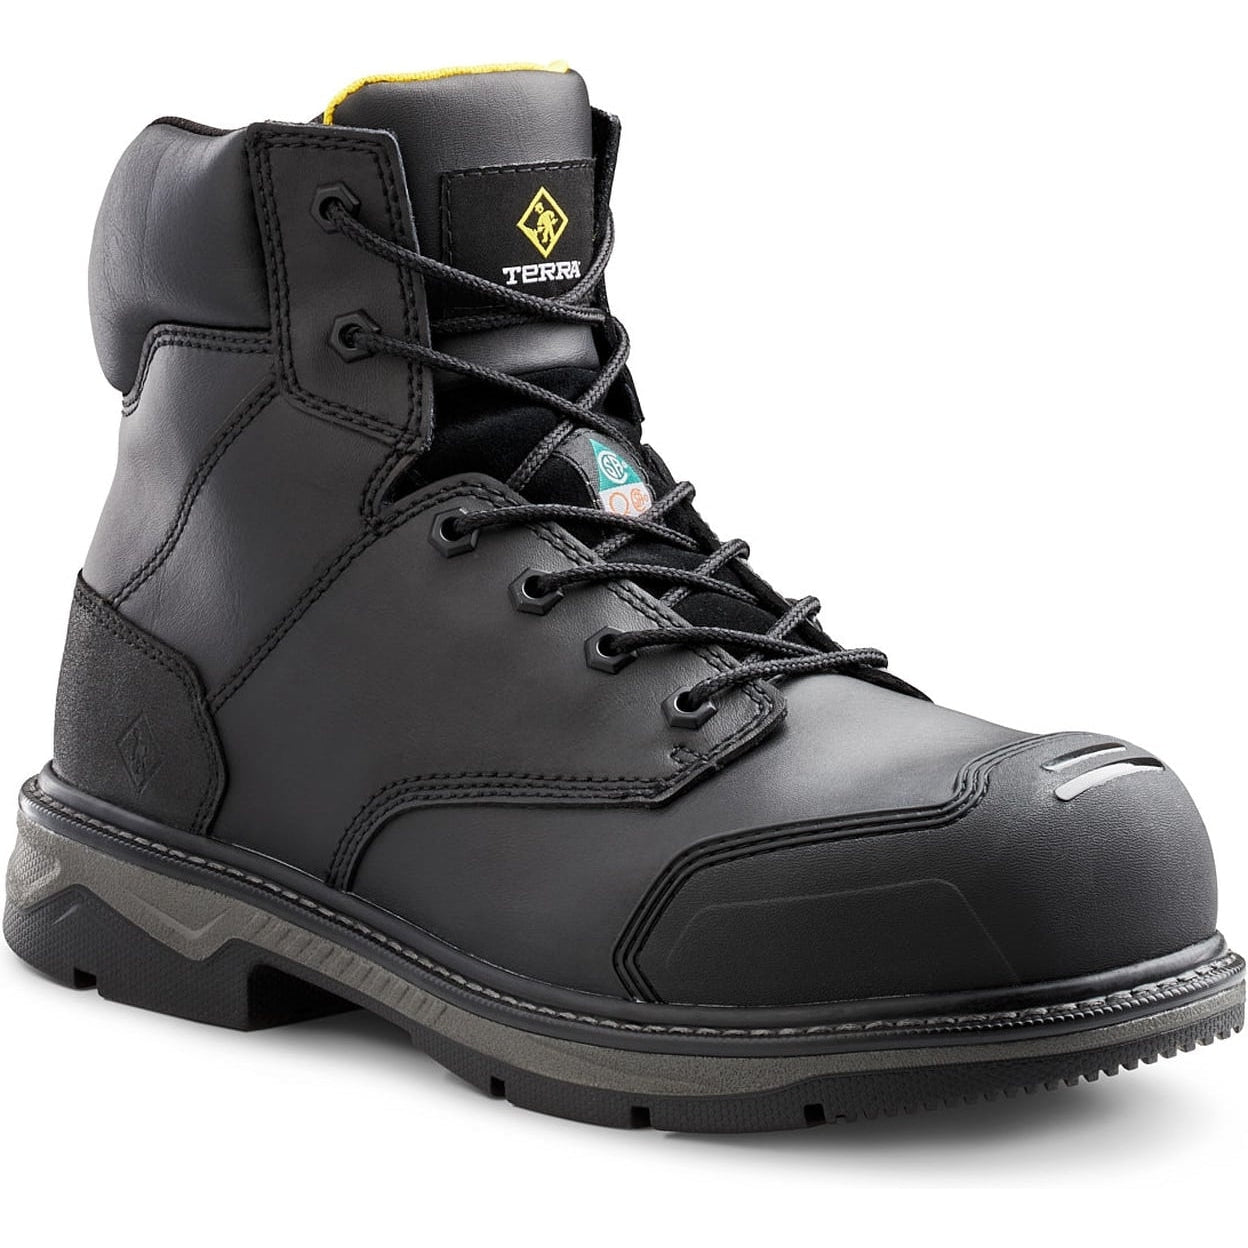 Terra Men's Patton 6" AT Waterproof Safety Work Boot -Black- 4NS6BK 7 / Wide / Black - Overlook Boots